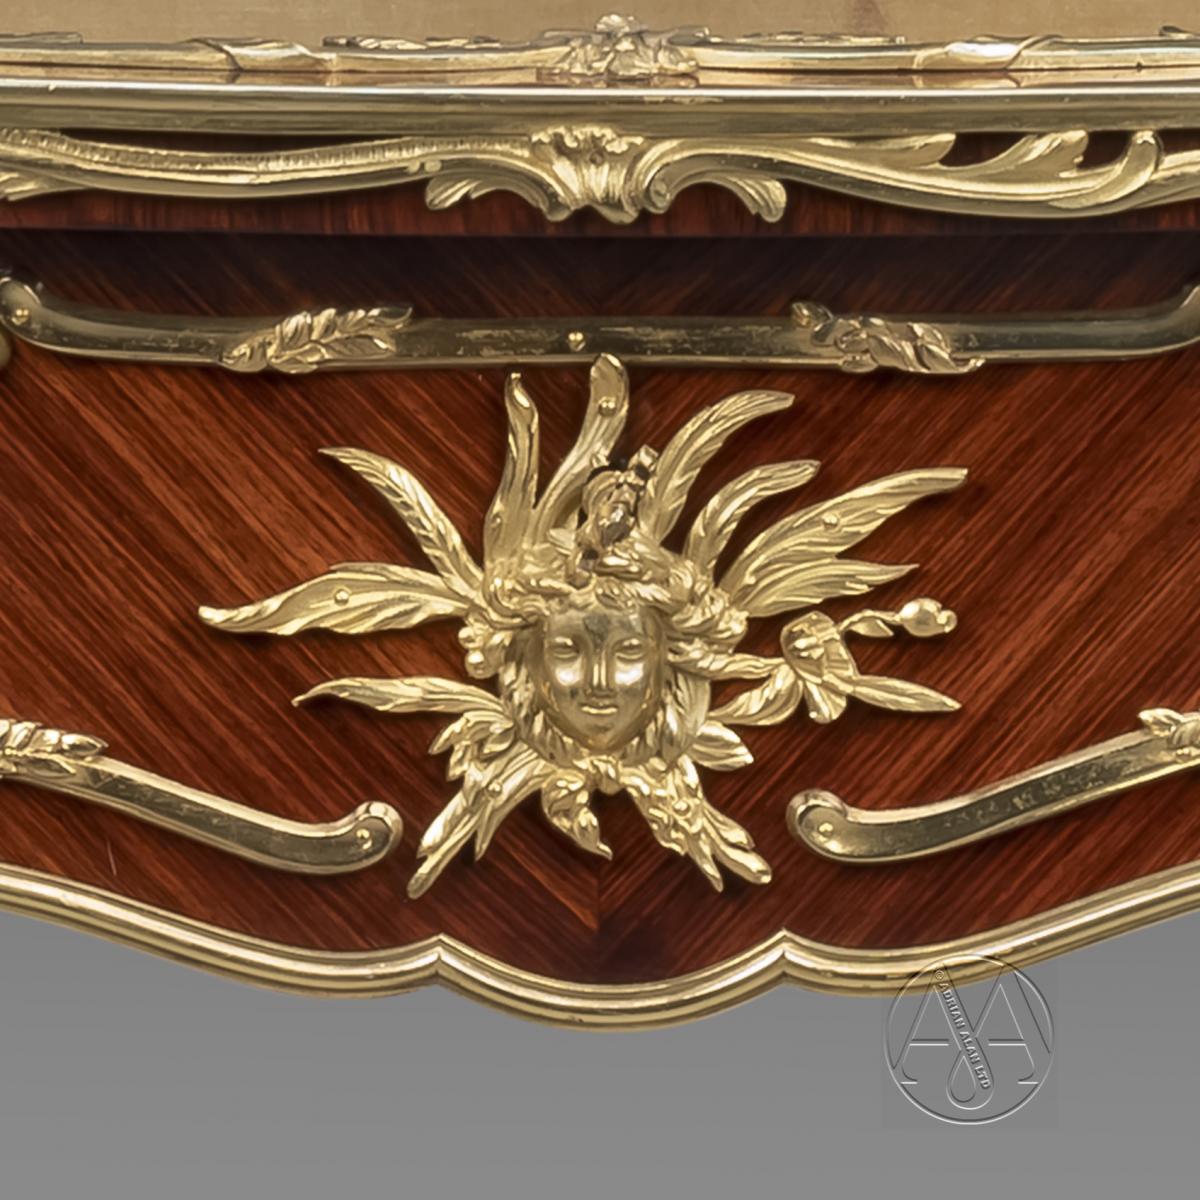 A Louis XV Style Gilt-Bronze Mounted  Vitrine Table By François Linke, The Mounts Designed by Léon Messagé